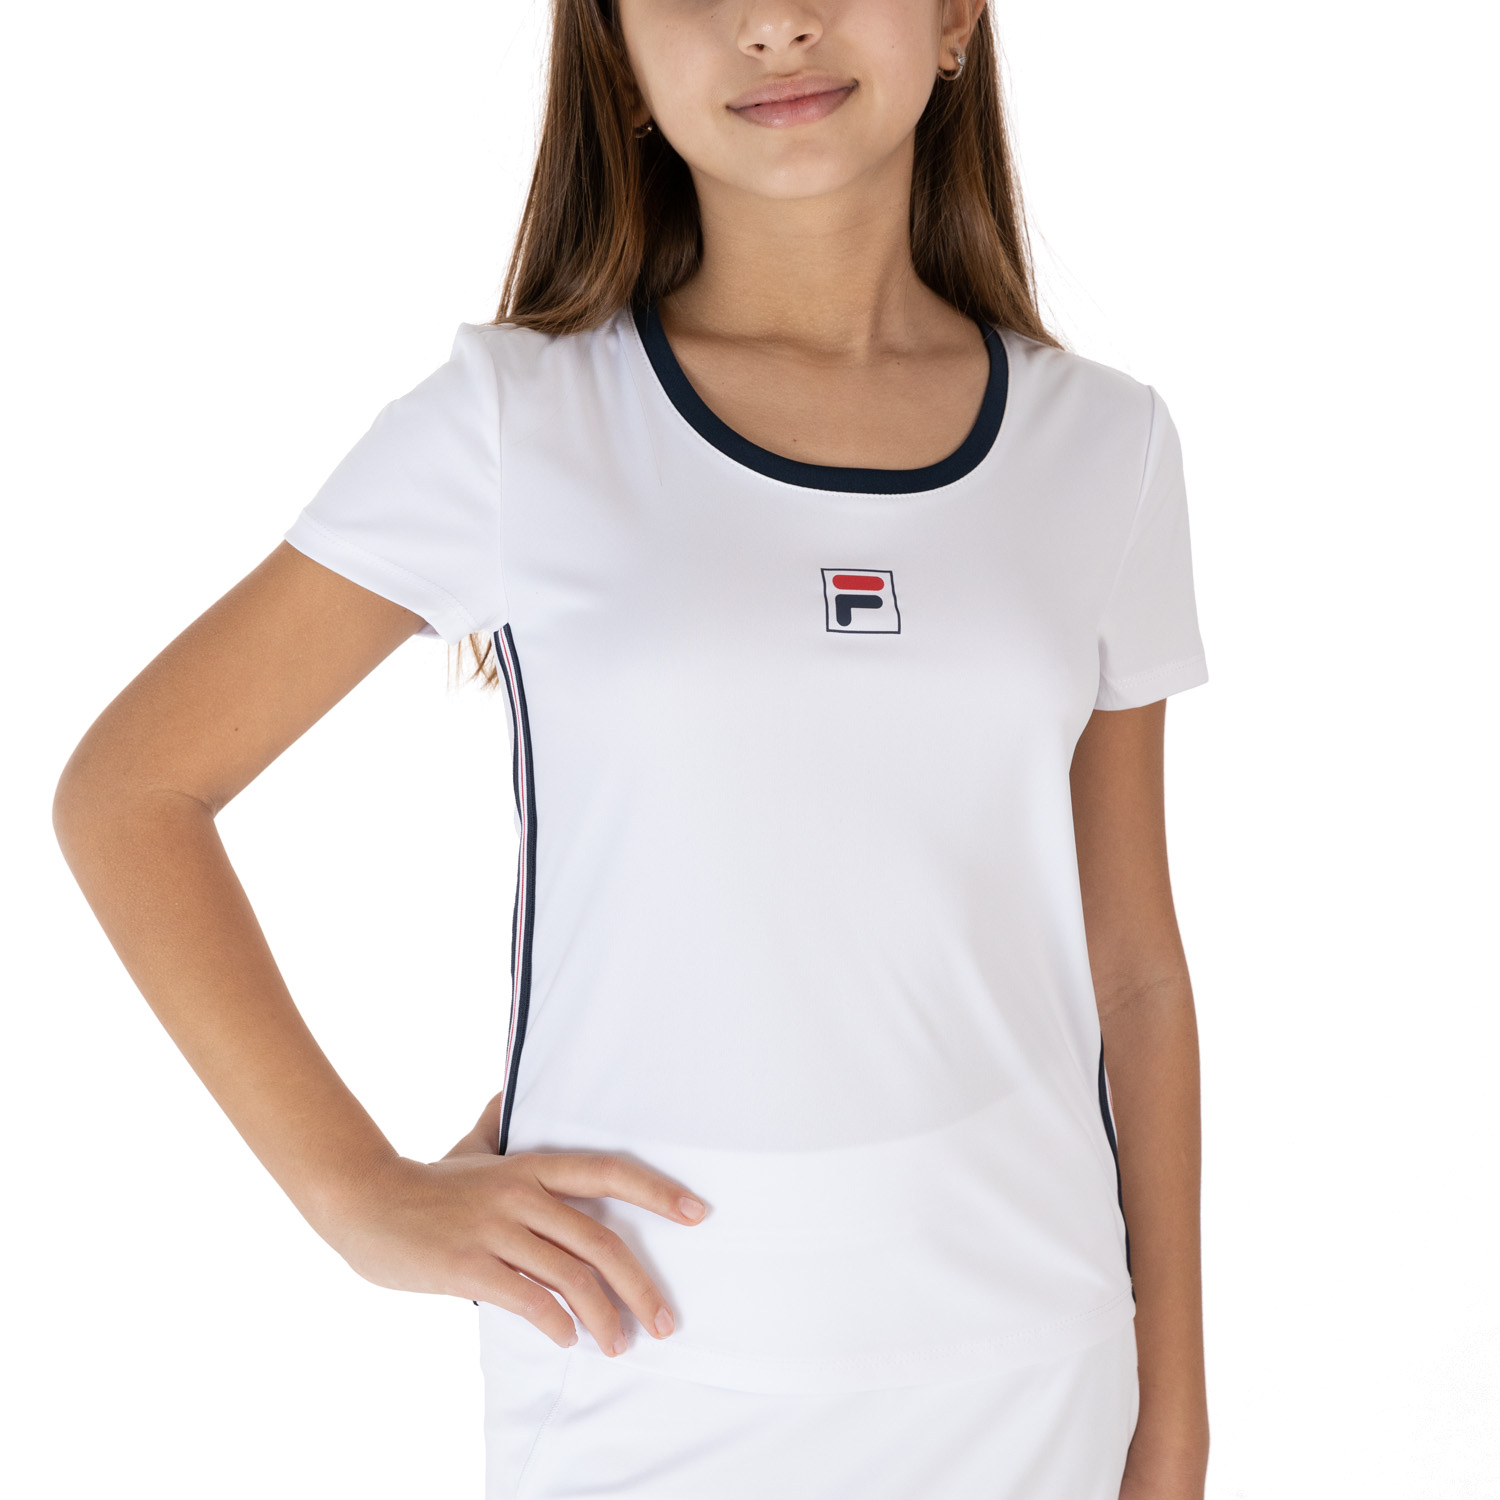 Fila Lucy T-Shirt Girls - White